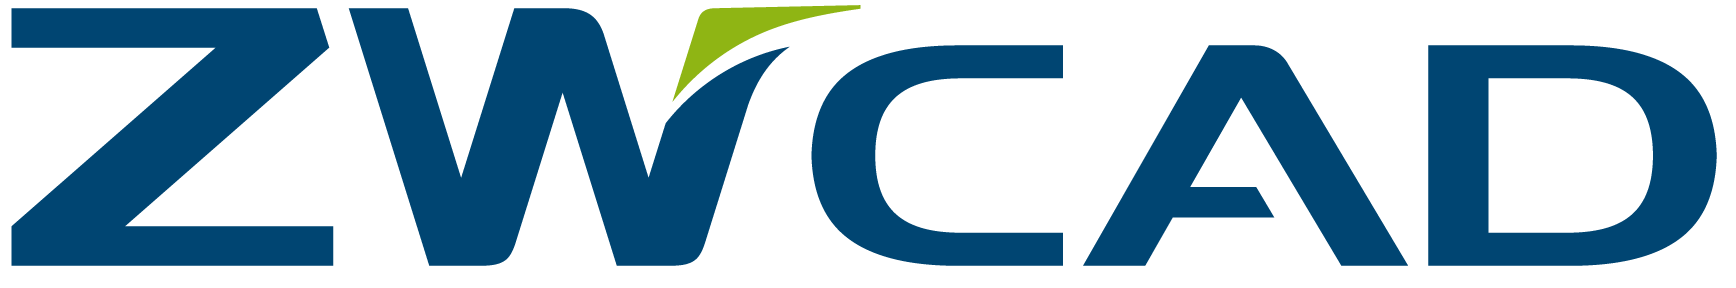 Logiciel Zwcad logo